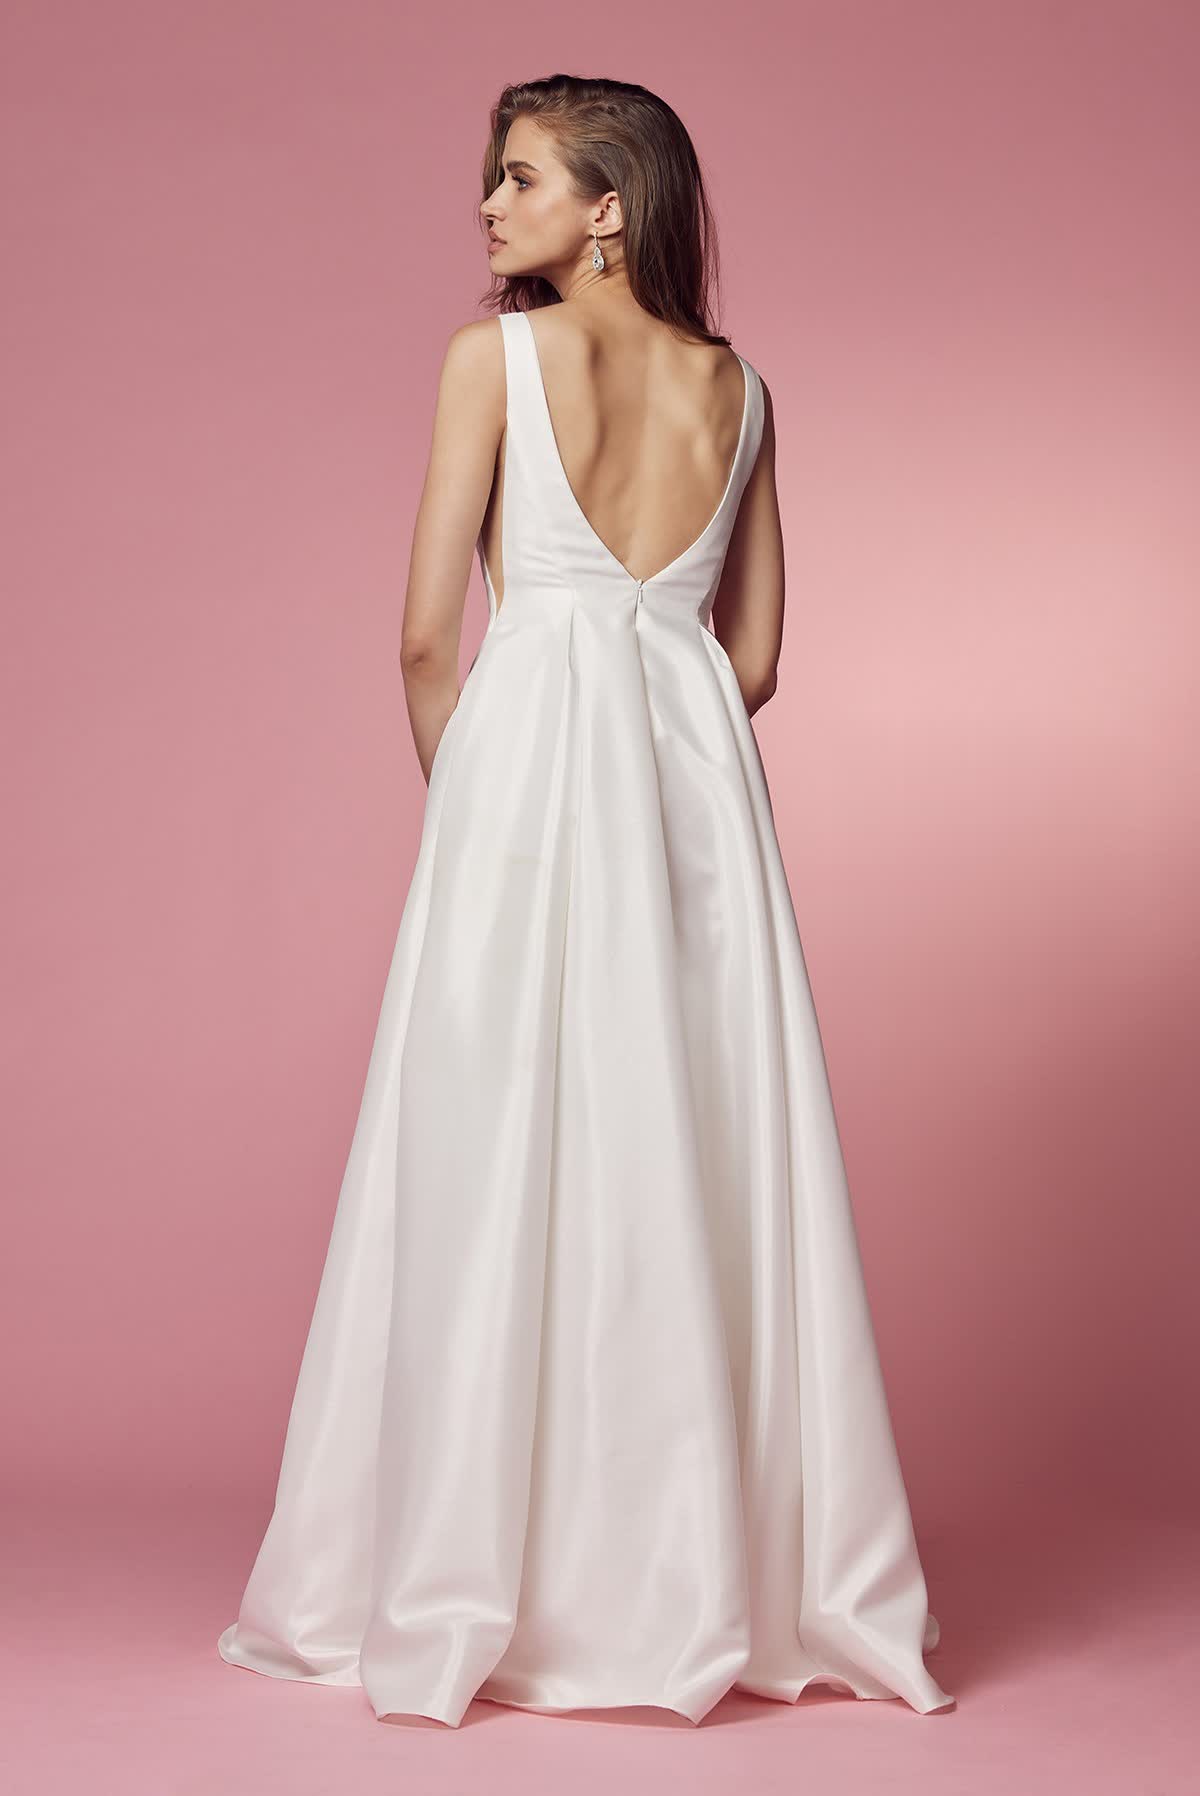 Sheer Side Cut Outs Illusion V-Neck A-Line Long Wedding Dress NXE156W-Wedding Dress-smcfashion.com